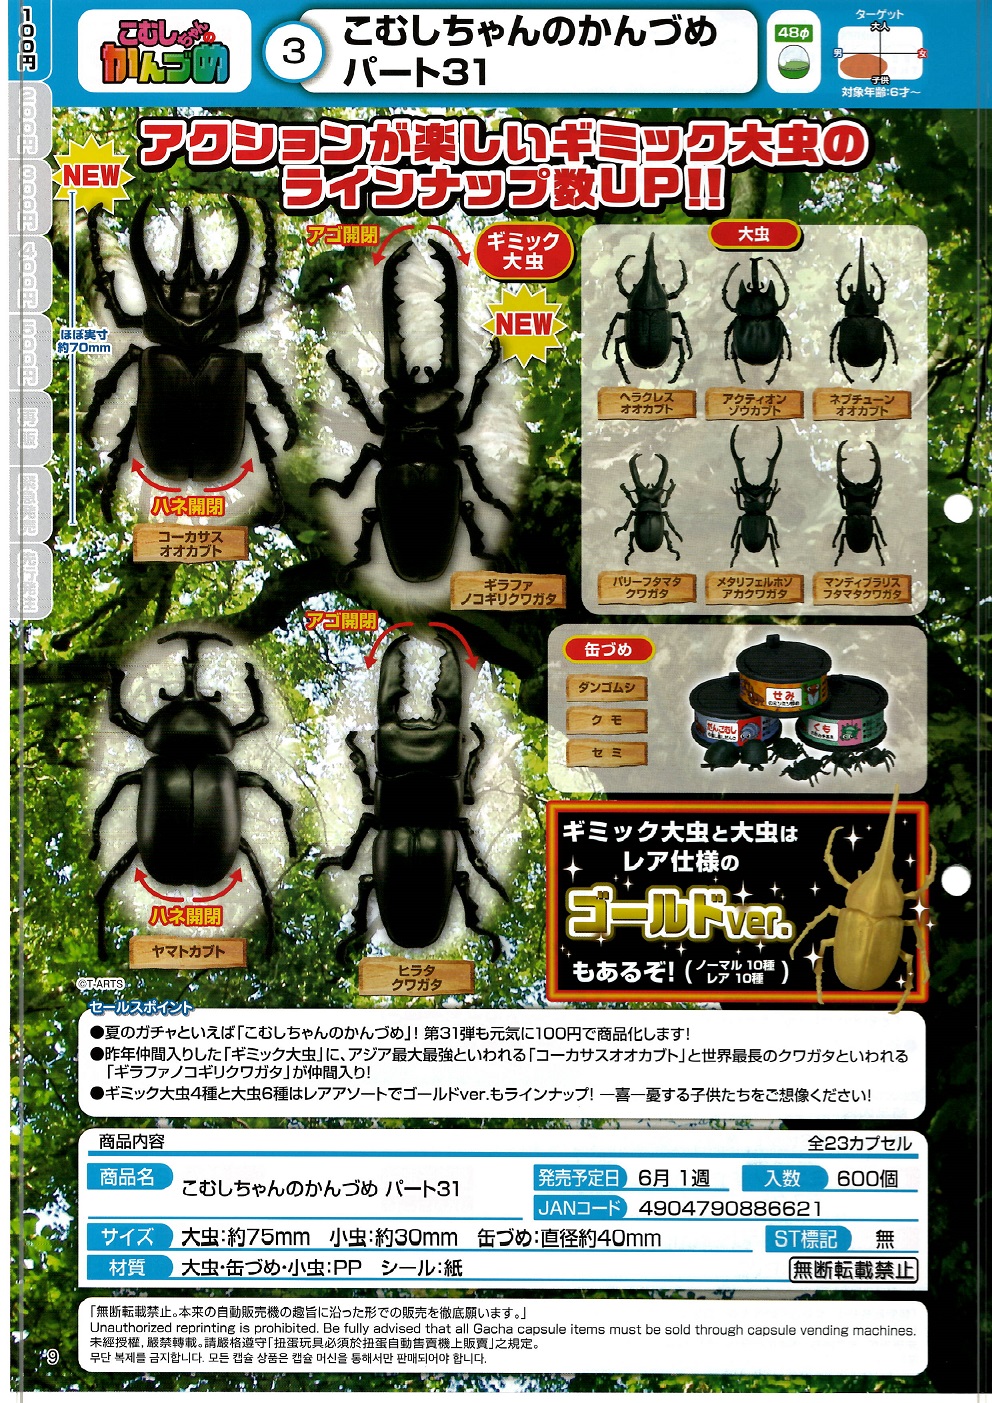 【B】100日元扭蛋 可动生物模型 昆虫之罐 第31弹 全23种 (1袋100个)  886621